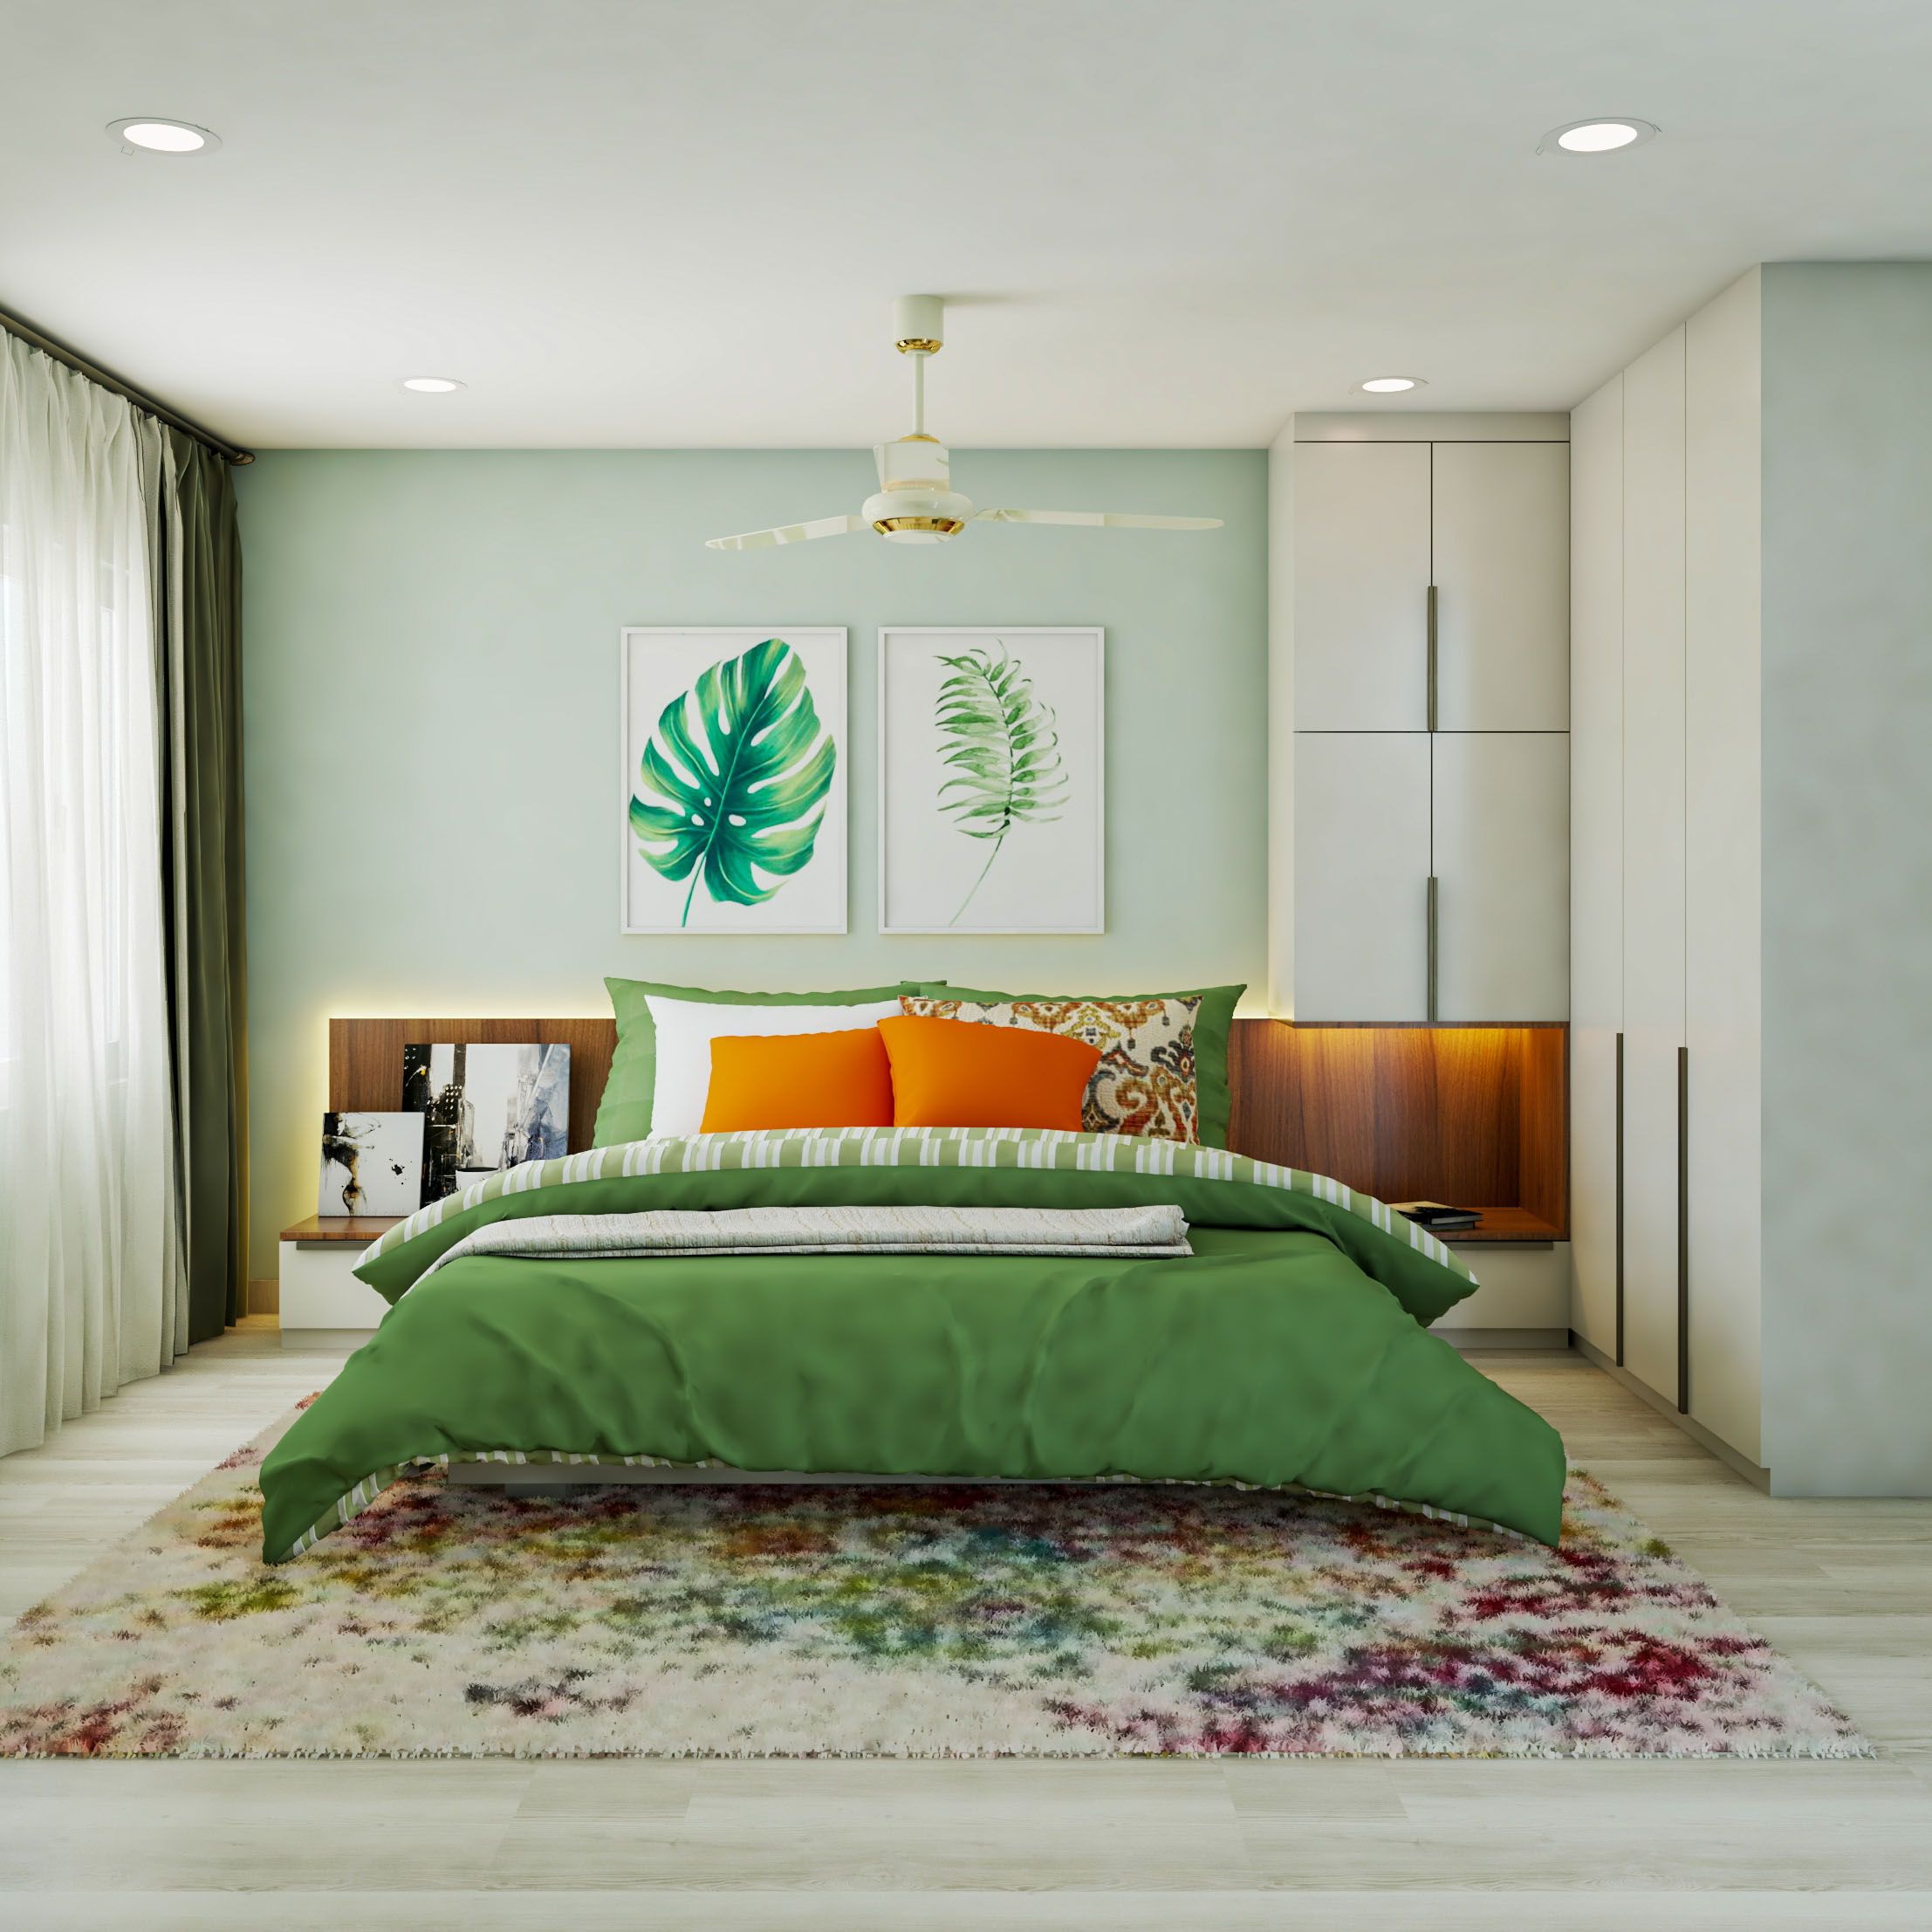 Contemporary Green Bedroom Space-Saving Design With 3-Door White Swing Wardrobe